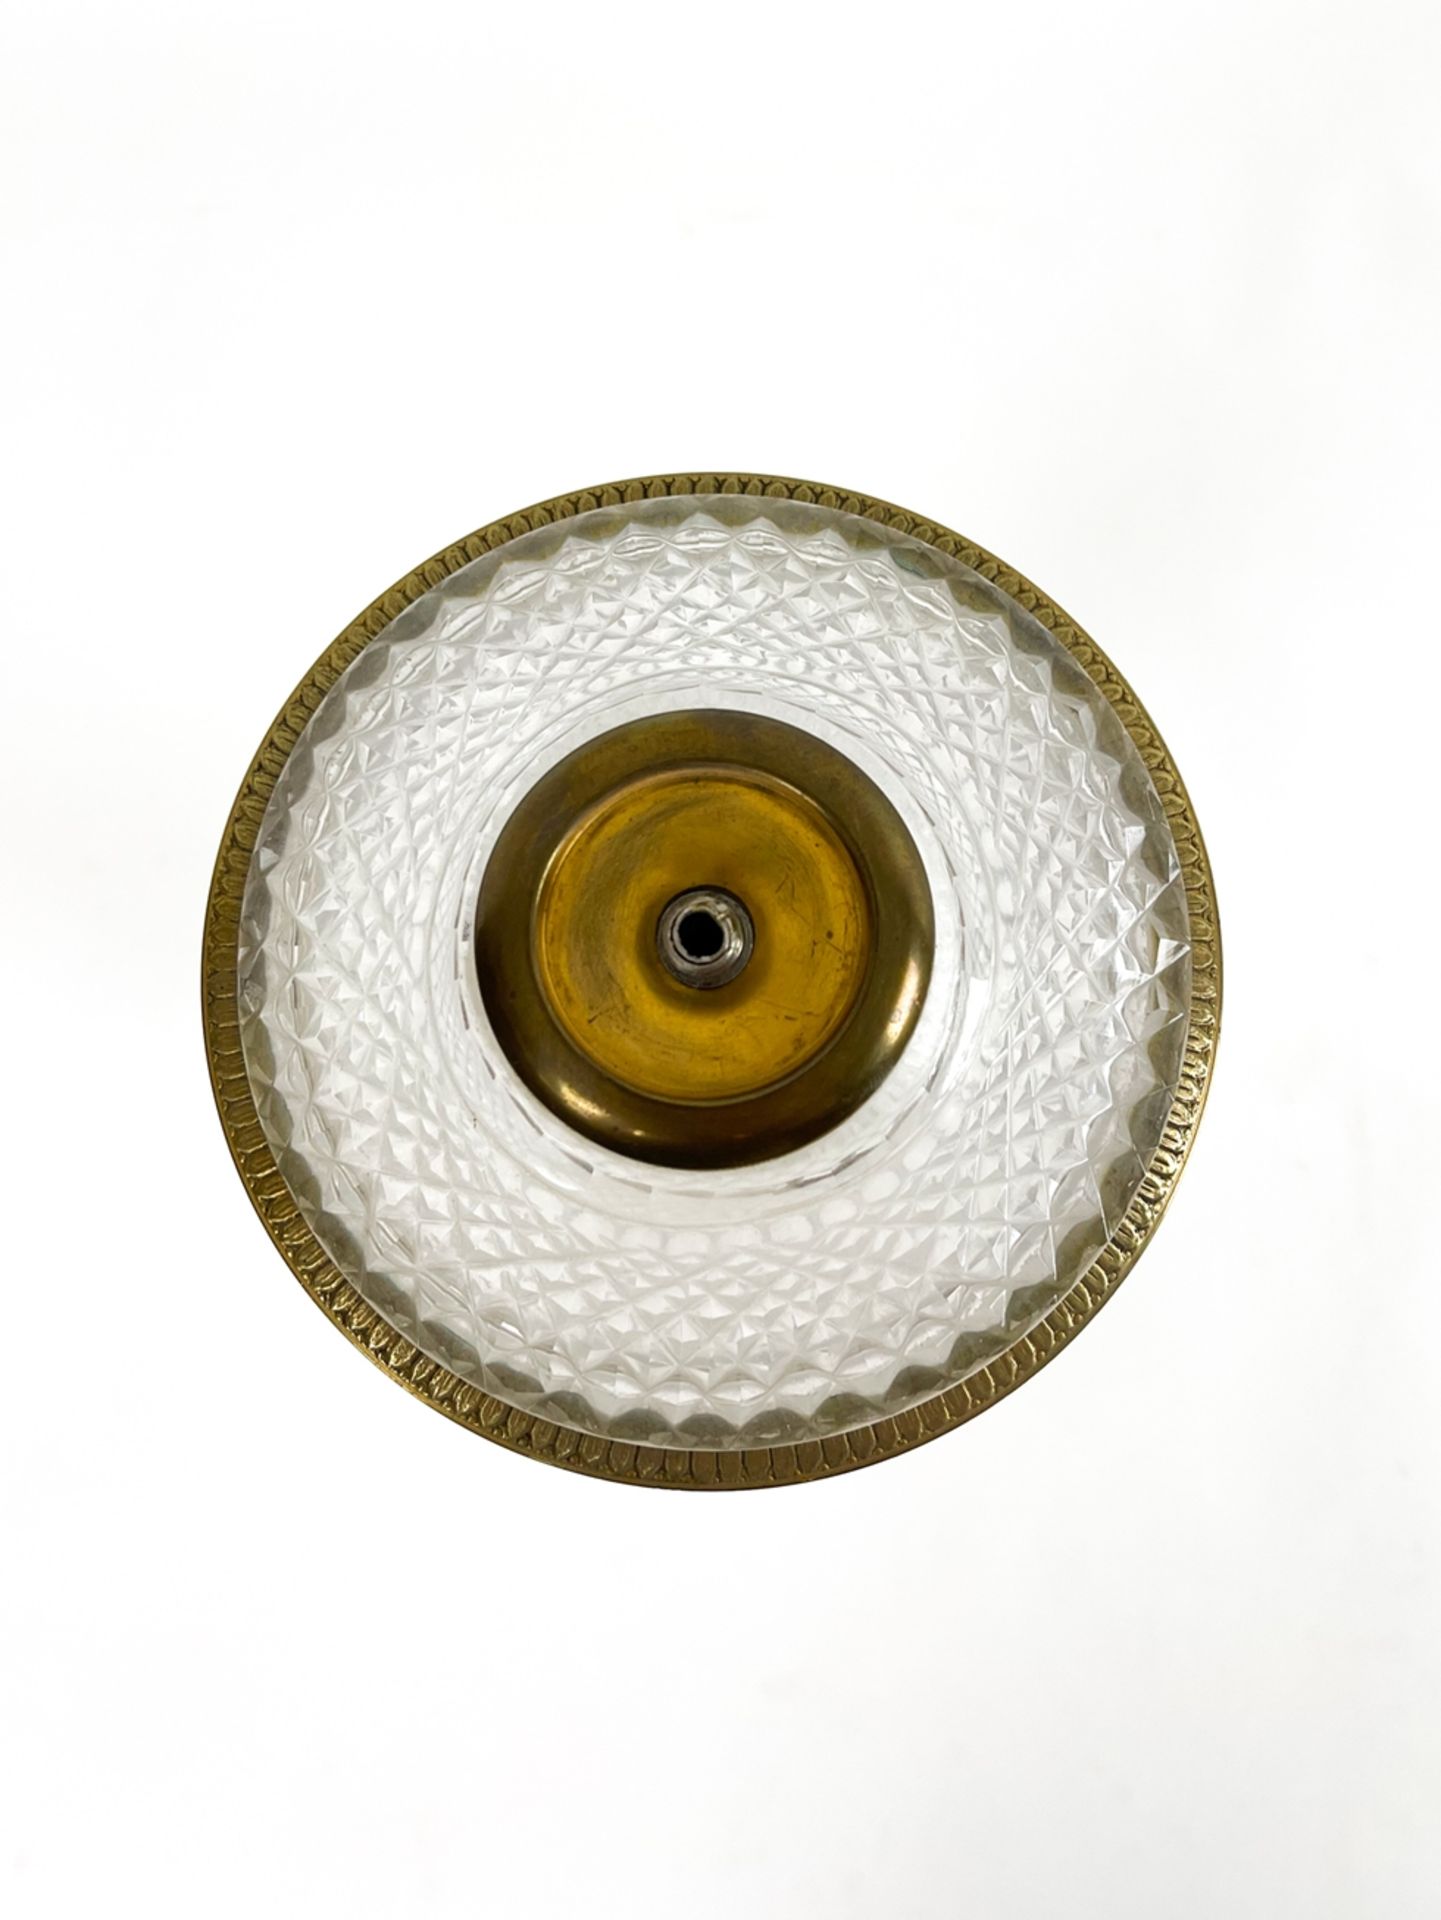 Prunkvoller Lampenfuß aus geschliffenem Glas/Messing - Image 3 of 3